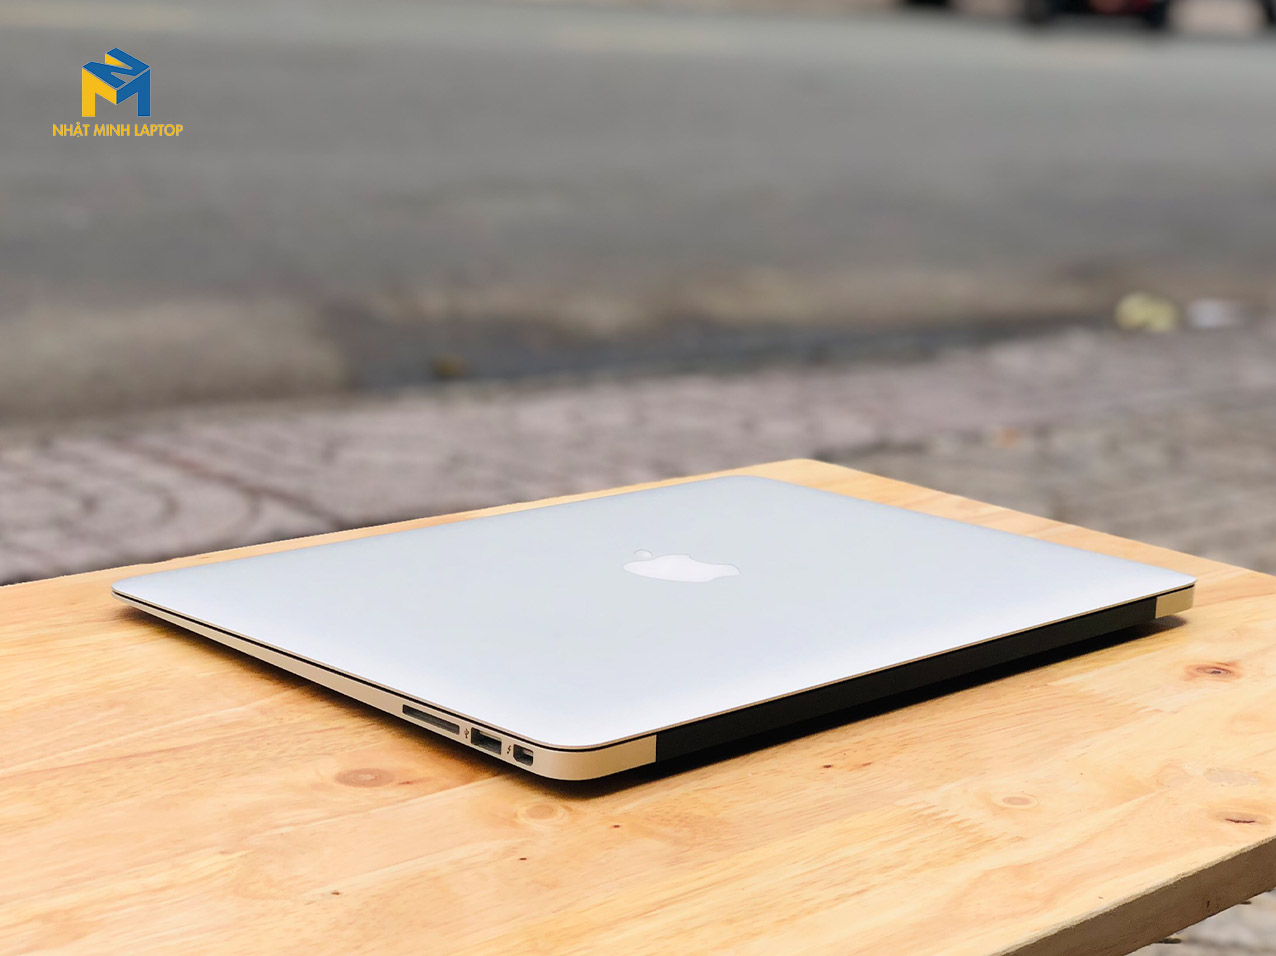 Macbook Air 13-inch 2015 i5 4G 128G